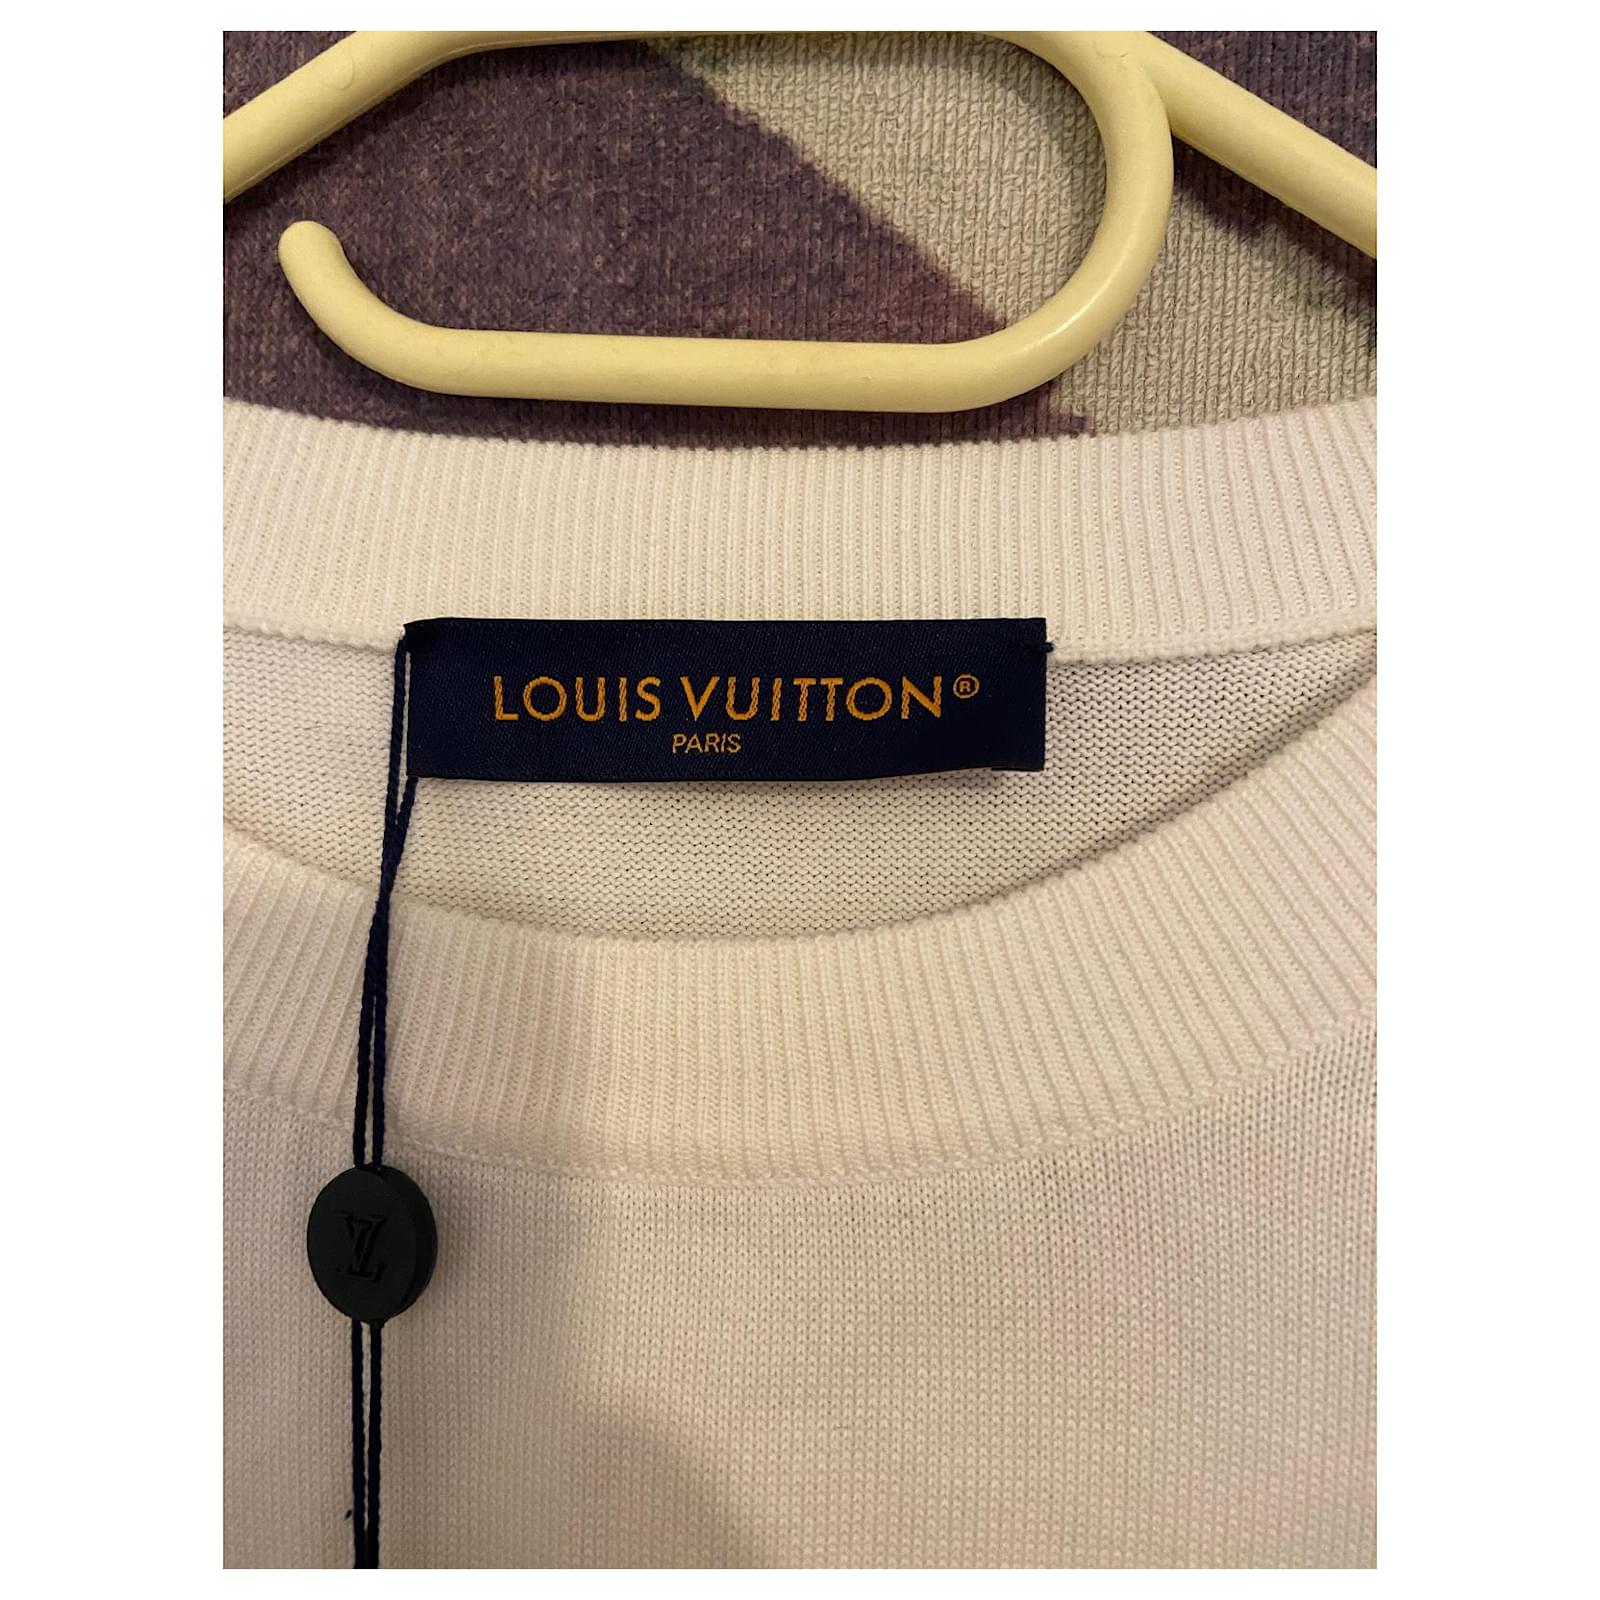 (REVIEW) 249¥ Louis Vuitton Monogram Comic T-Shirt : r